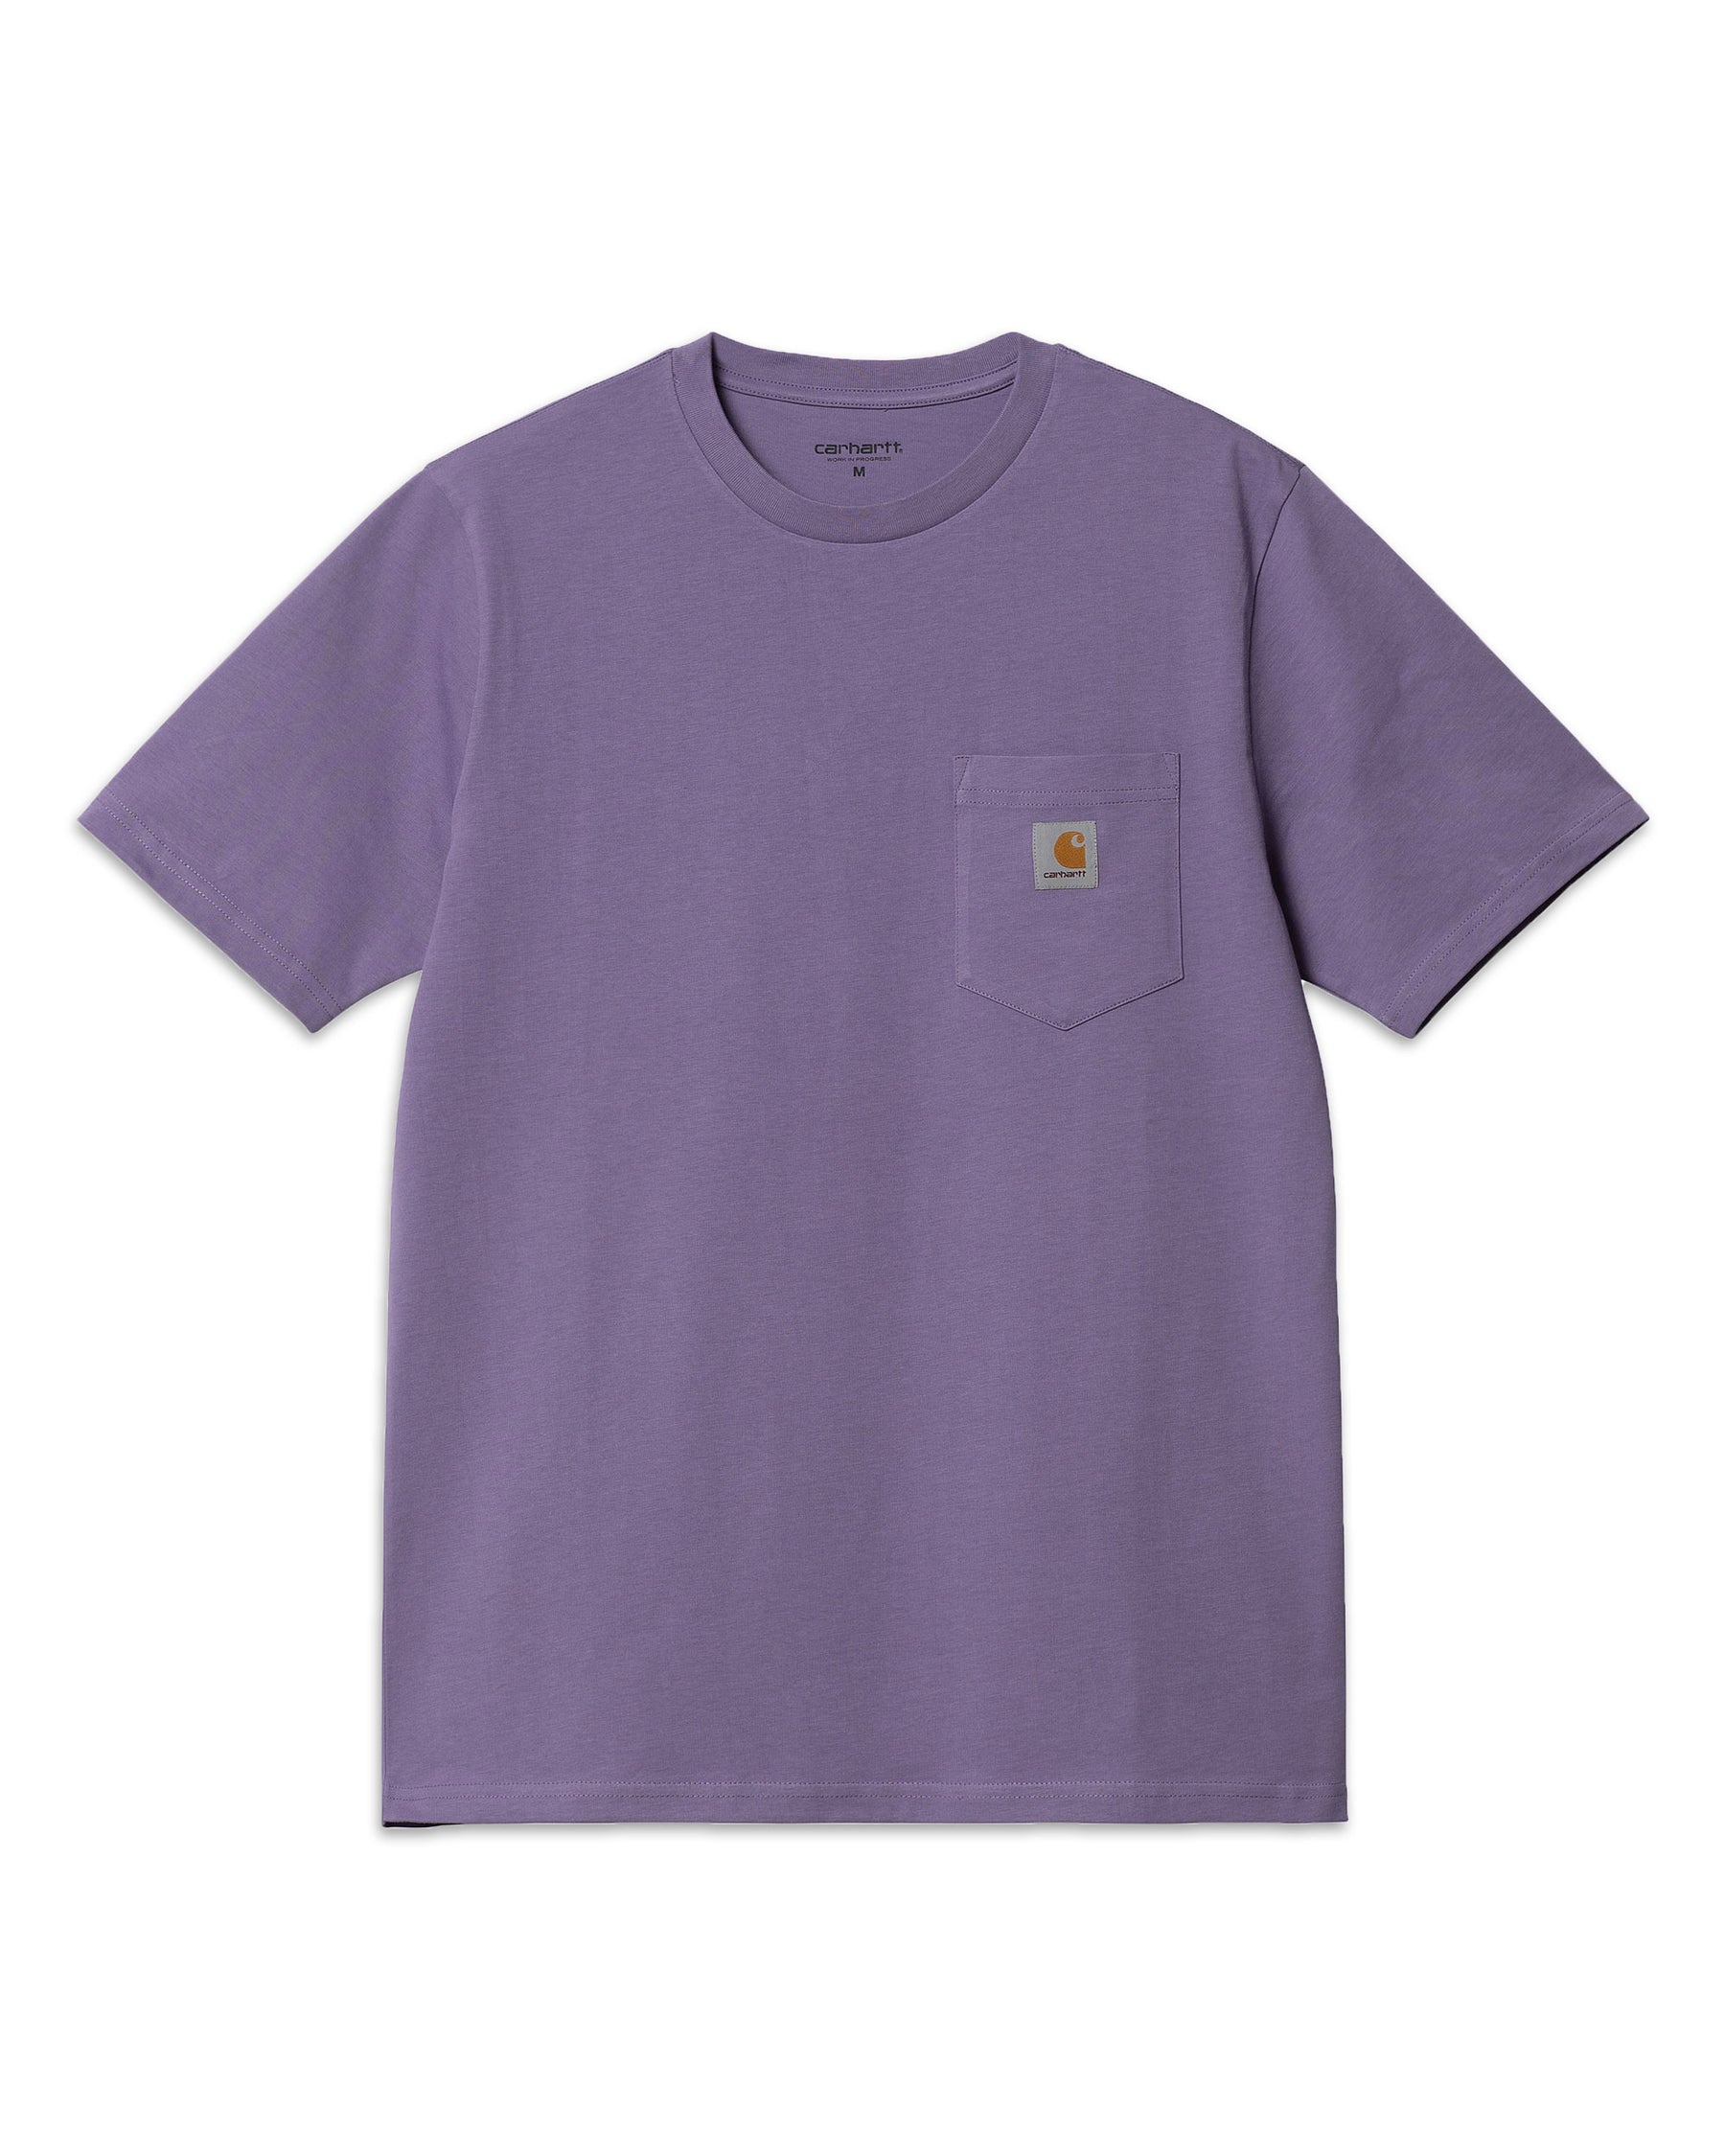 Carhartt Wip Pocket T-Shirt Violanda